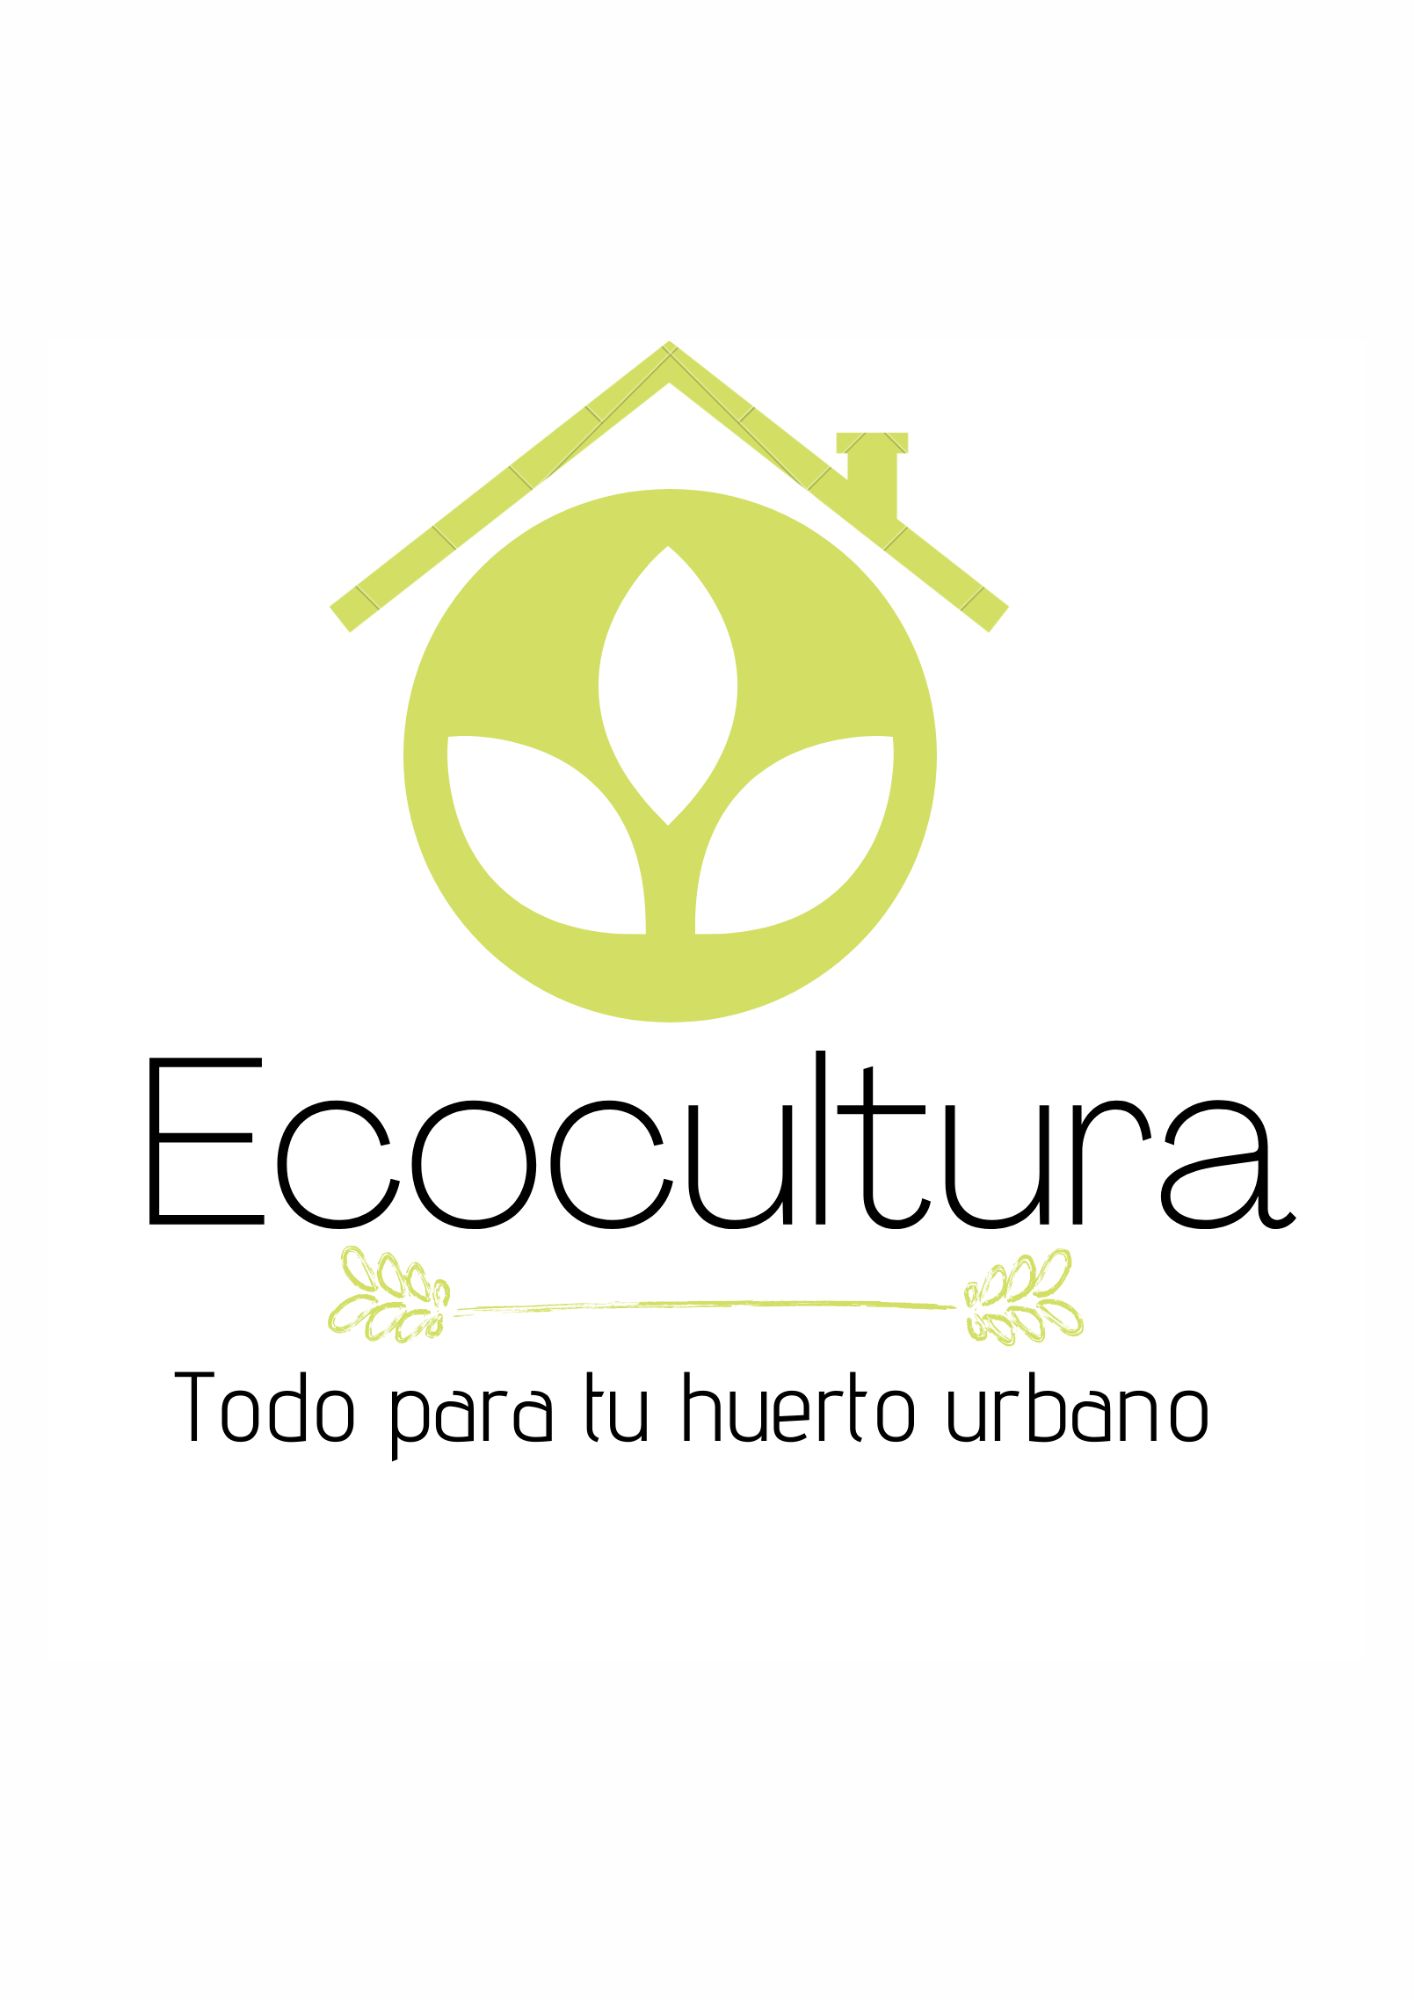 Ecocultura